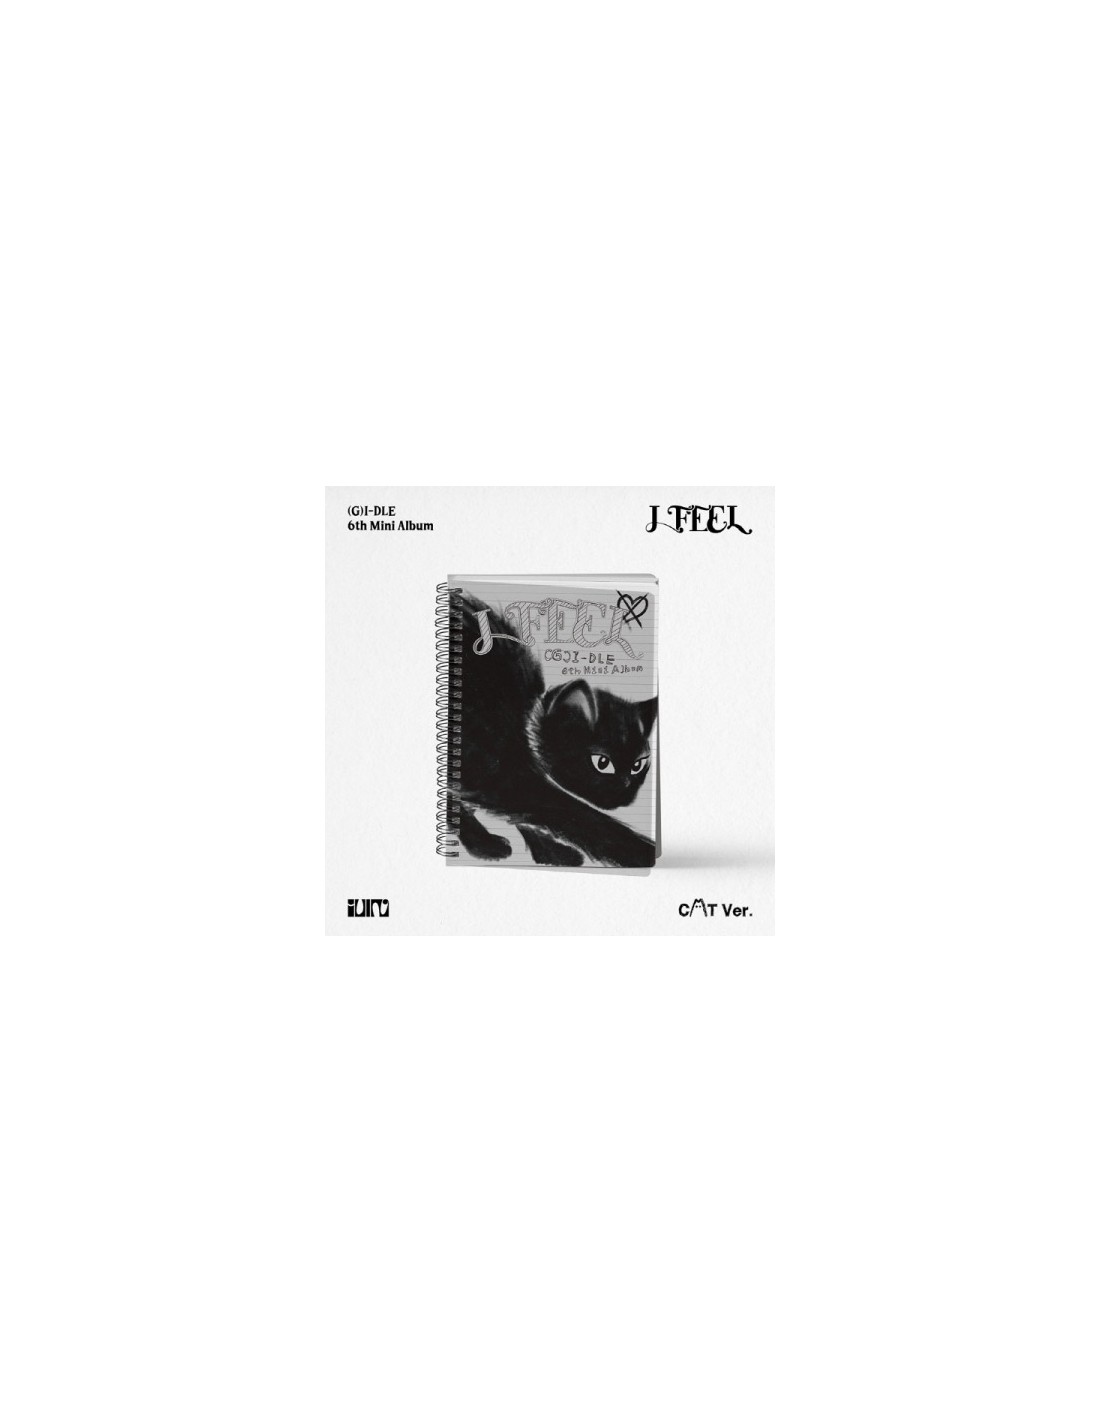 (G)I-DLE 6th Mini Album - I feel (Cat Ver.) CD + Poster